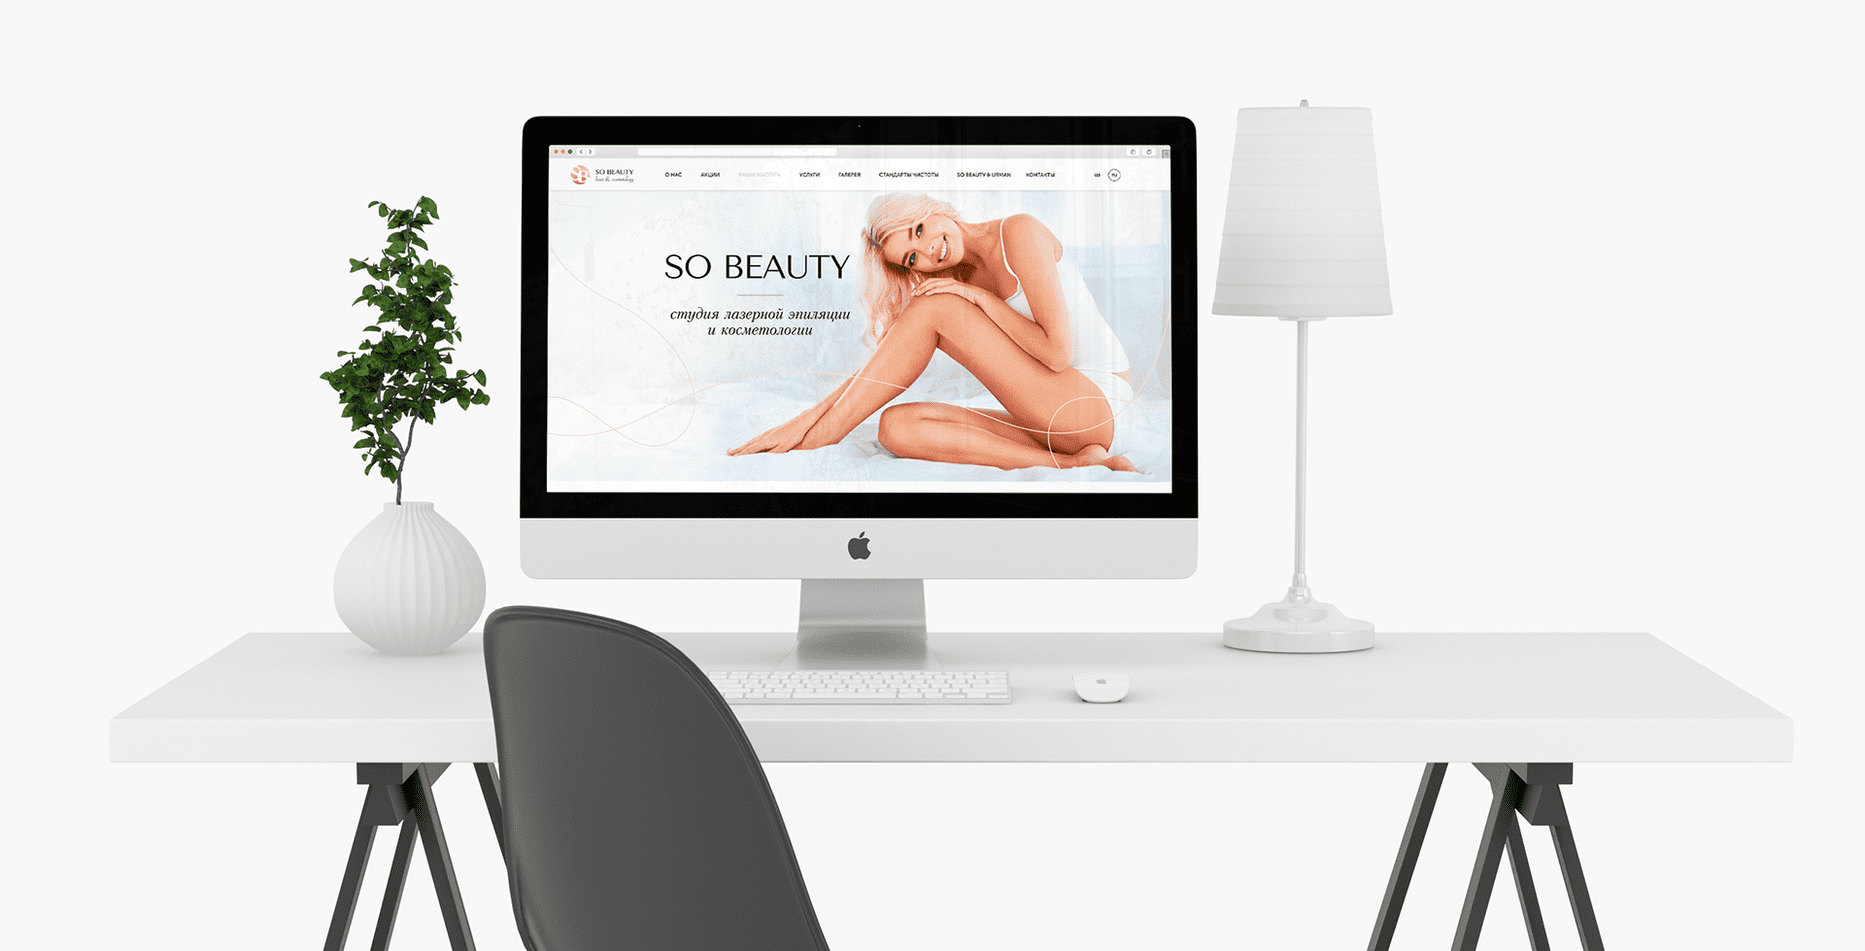 Case: corporate identity development, logo rebranding, website for So Beauty — Rubarb - Image - 8